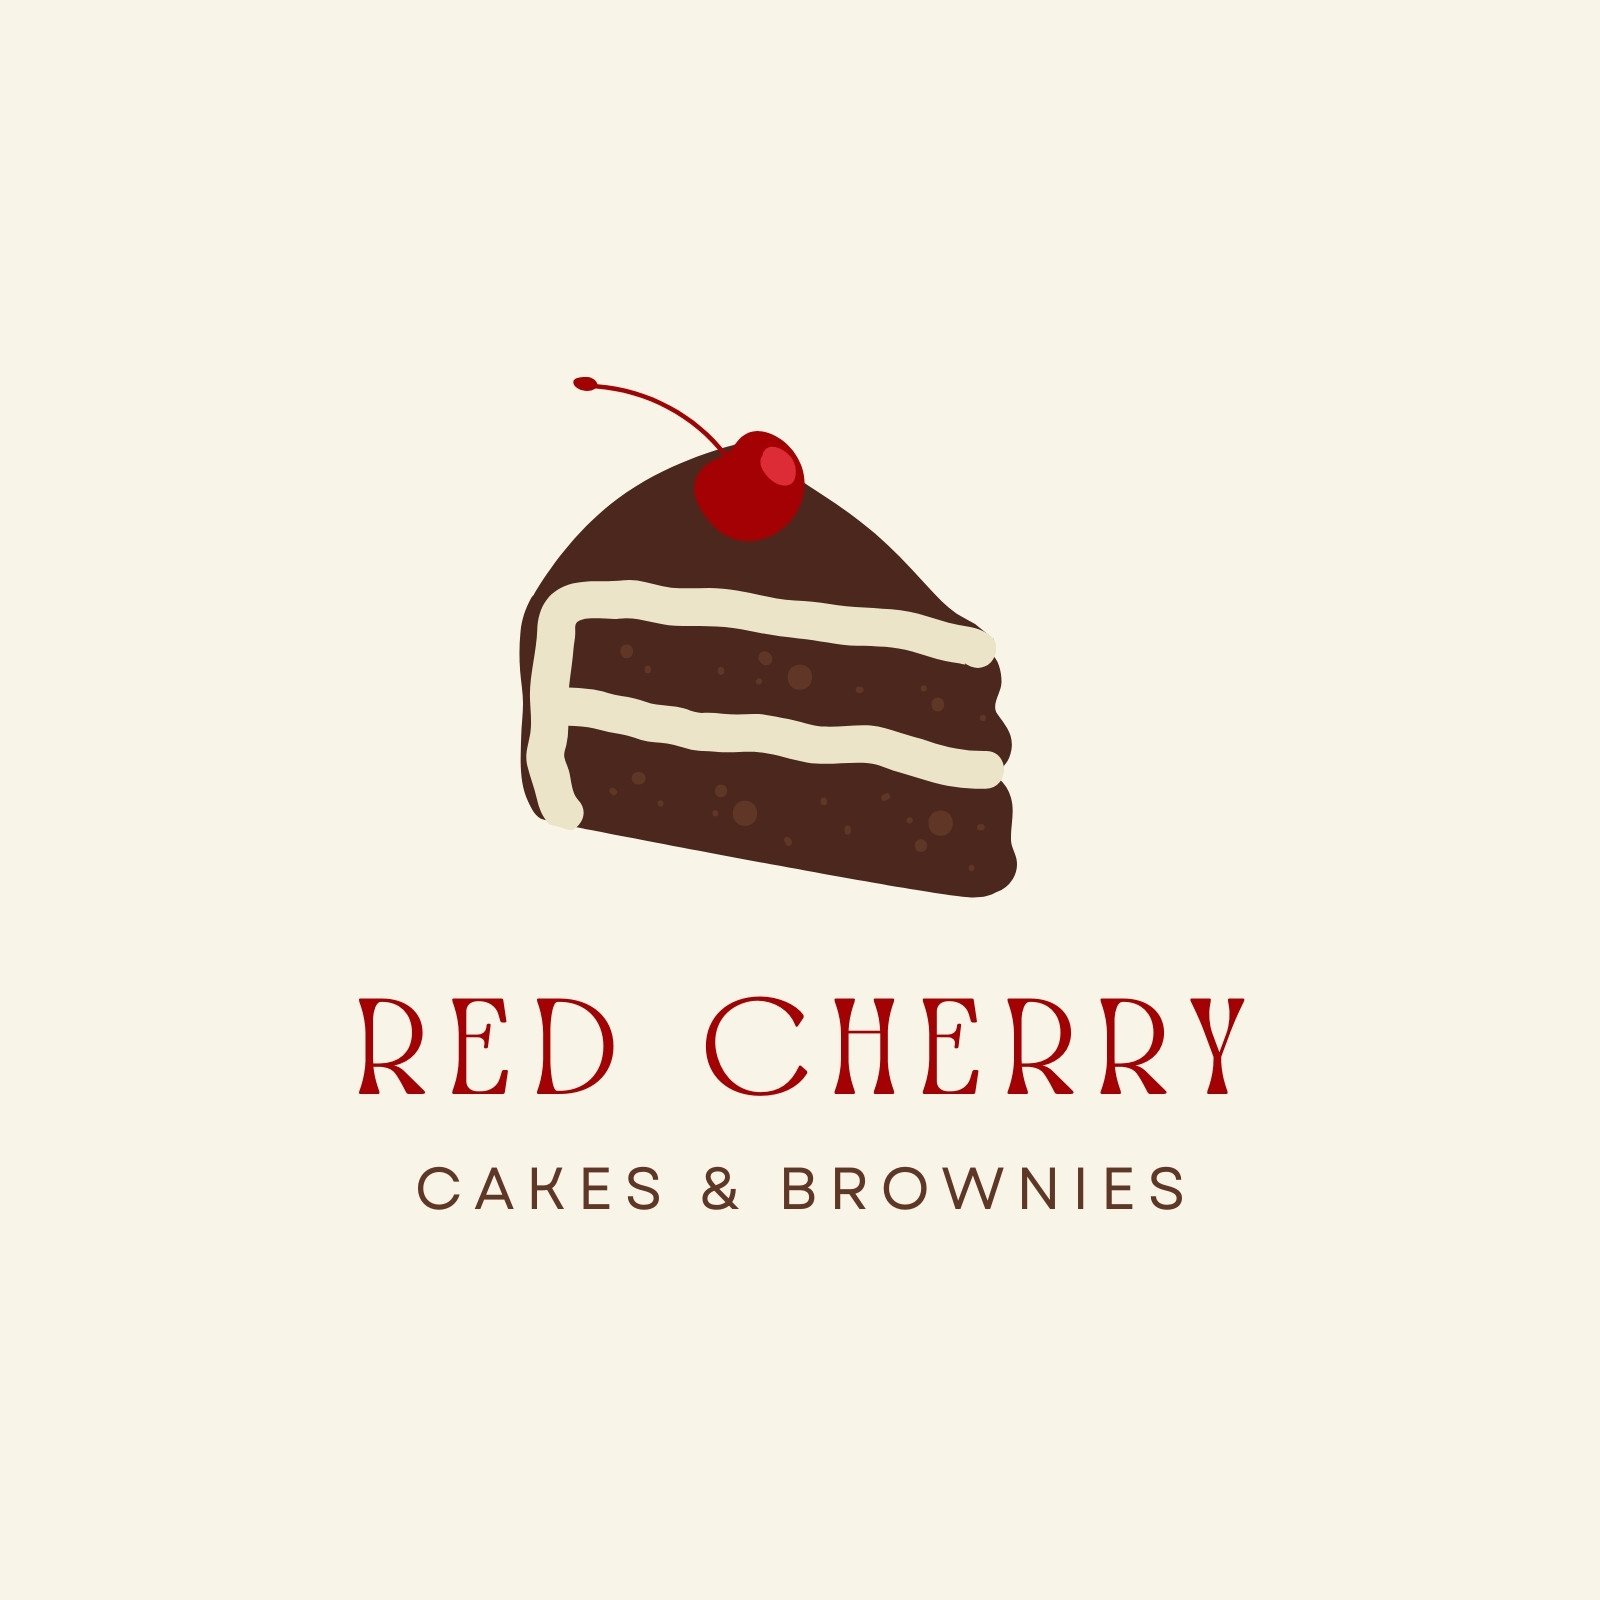 Cherry Cake Logo & Business Card Template - The Design Love | Business card  logo, Business card template, Cake logo